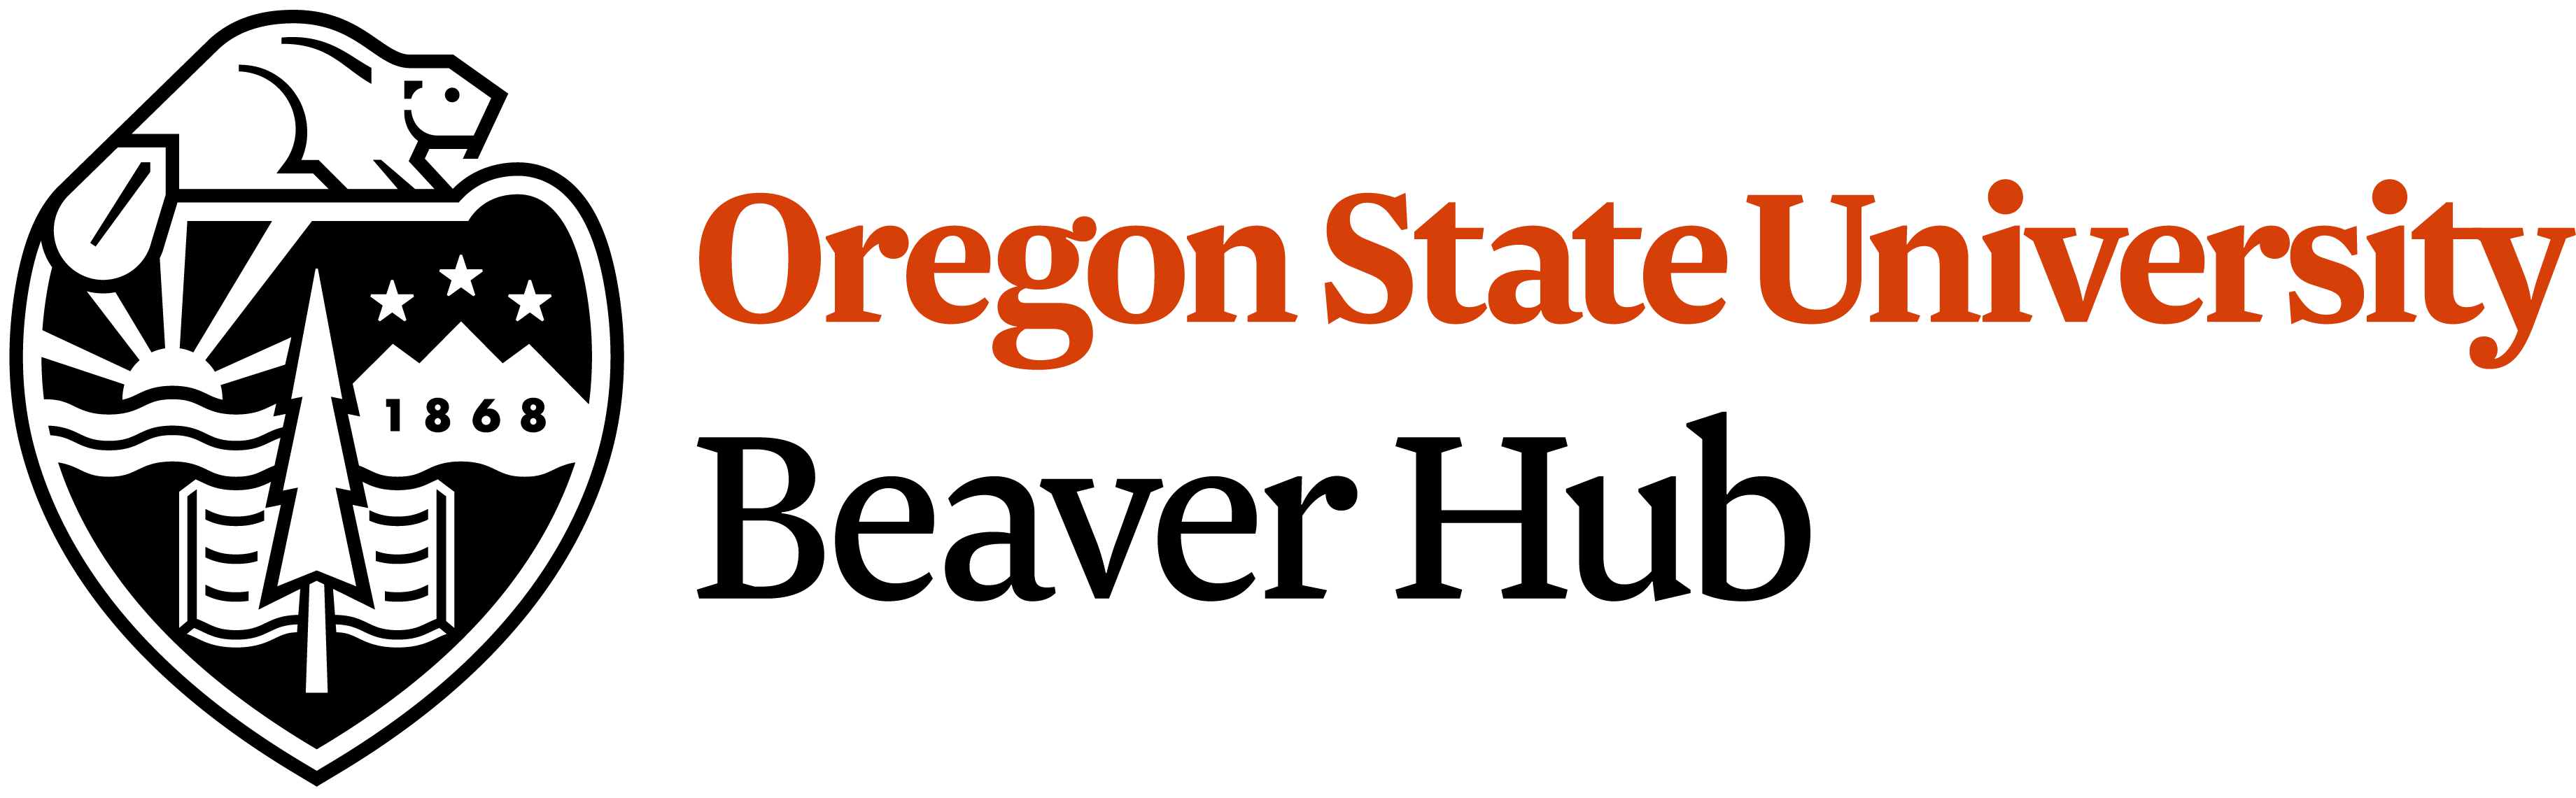 Oregon State University Beaver Hub logo